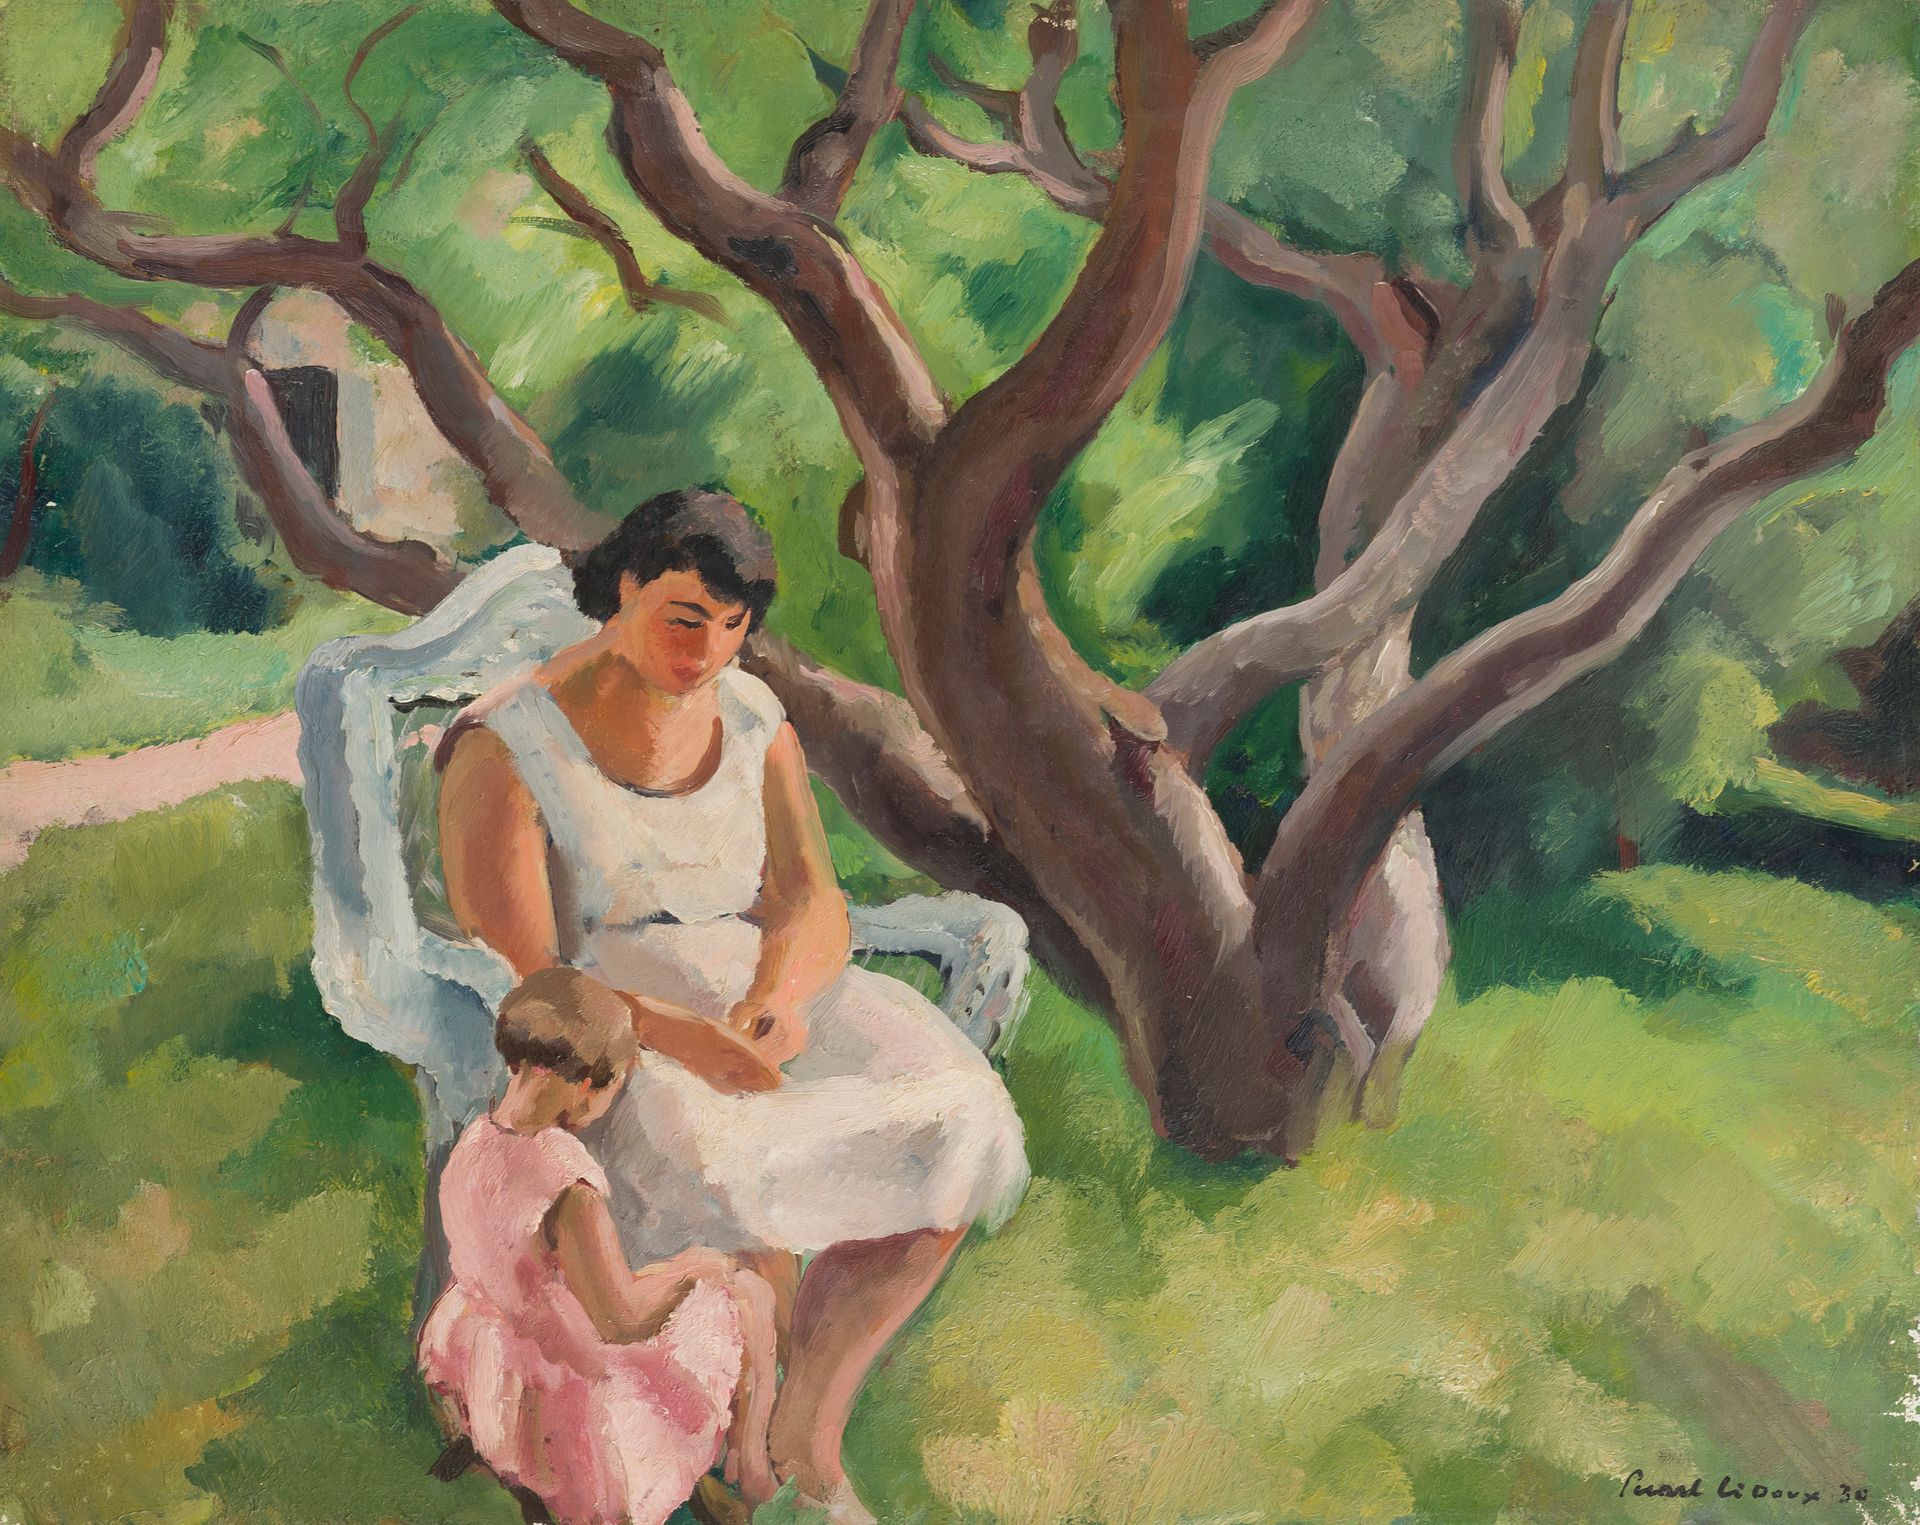 Null 夏尔-皮卡特-勒杜(1881-1959)
皮卡特-勒-杜克斯夫人和她的女儿，1930年
布面油画，右下角有签名
65 x 81 cm